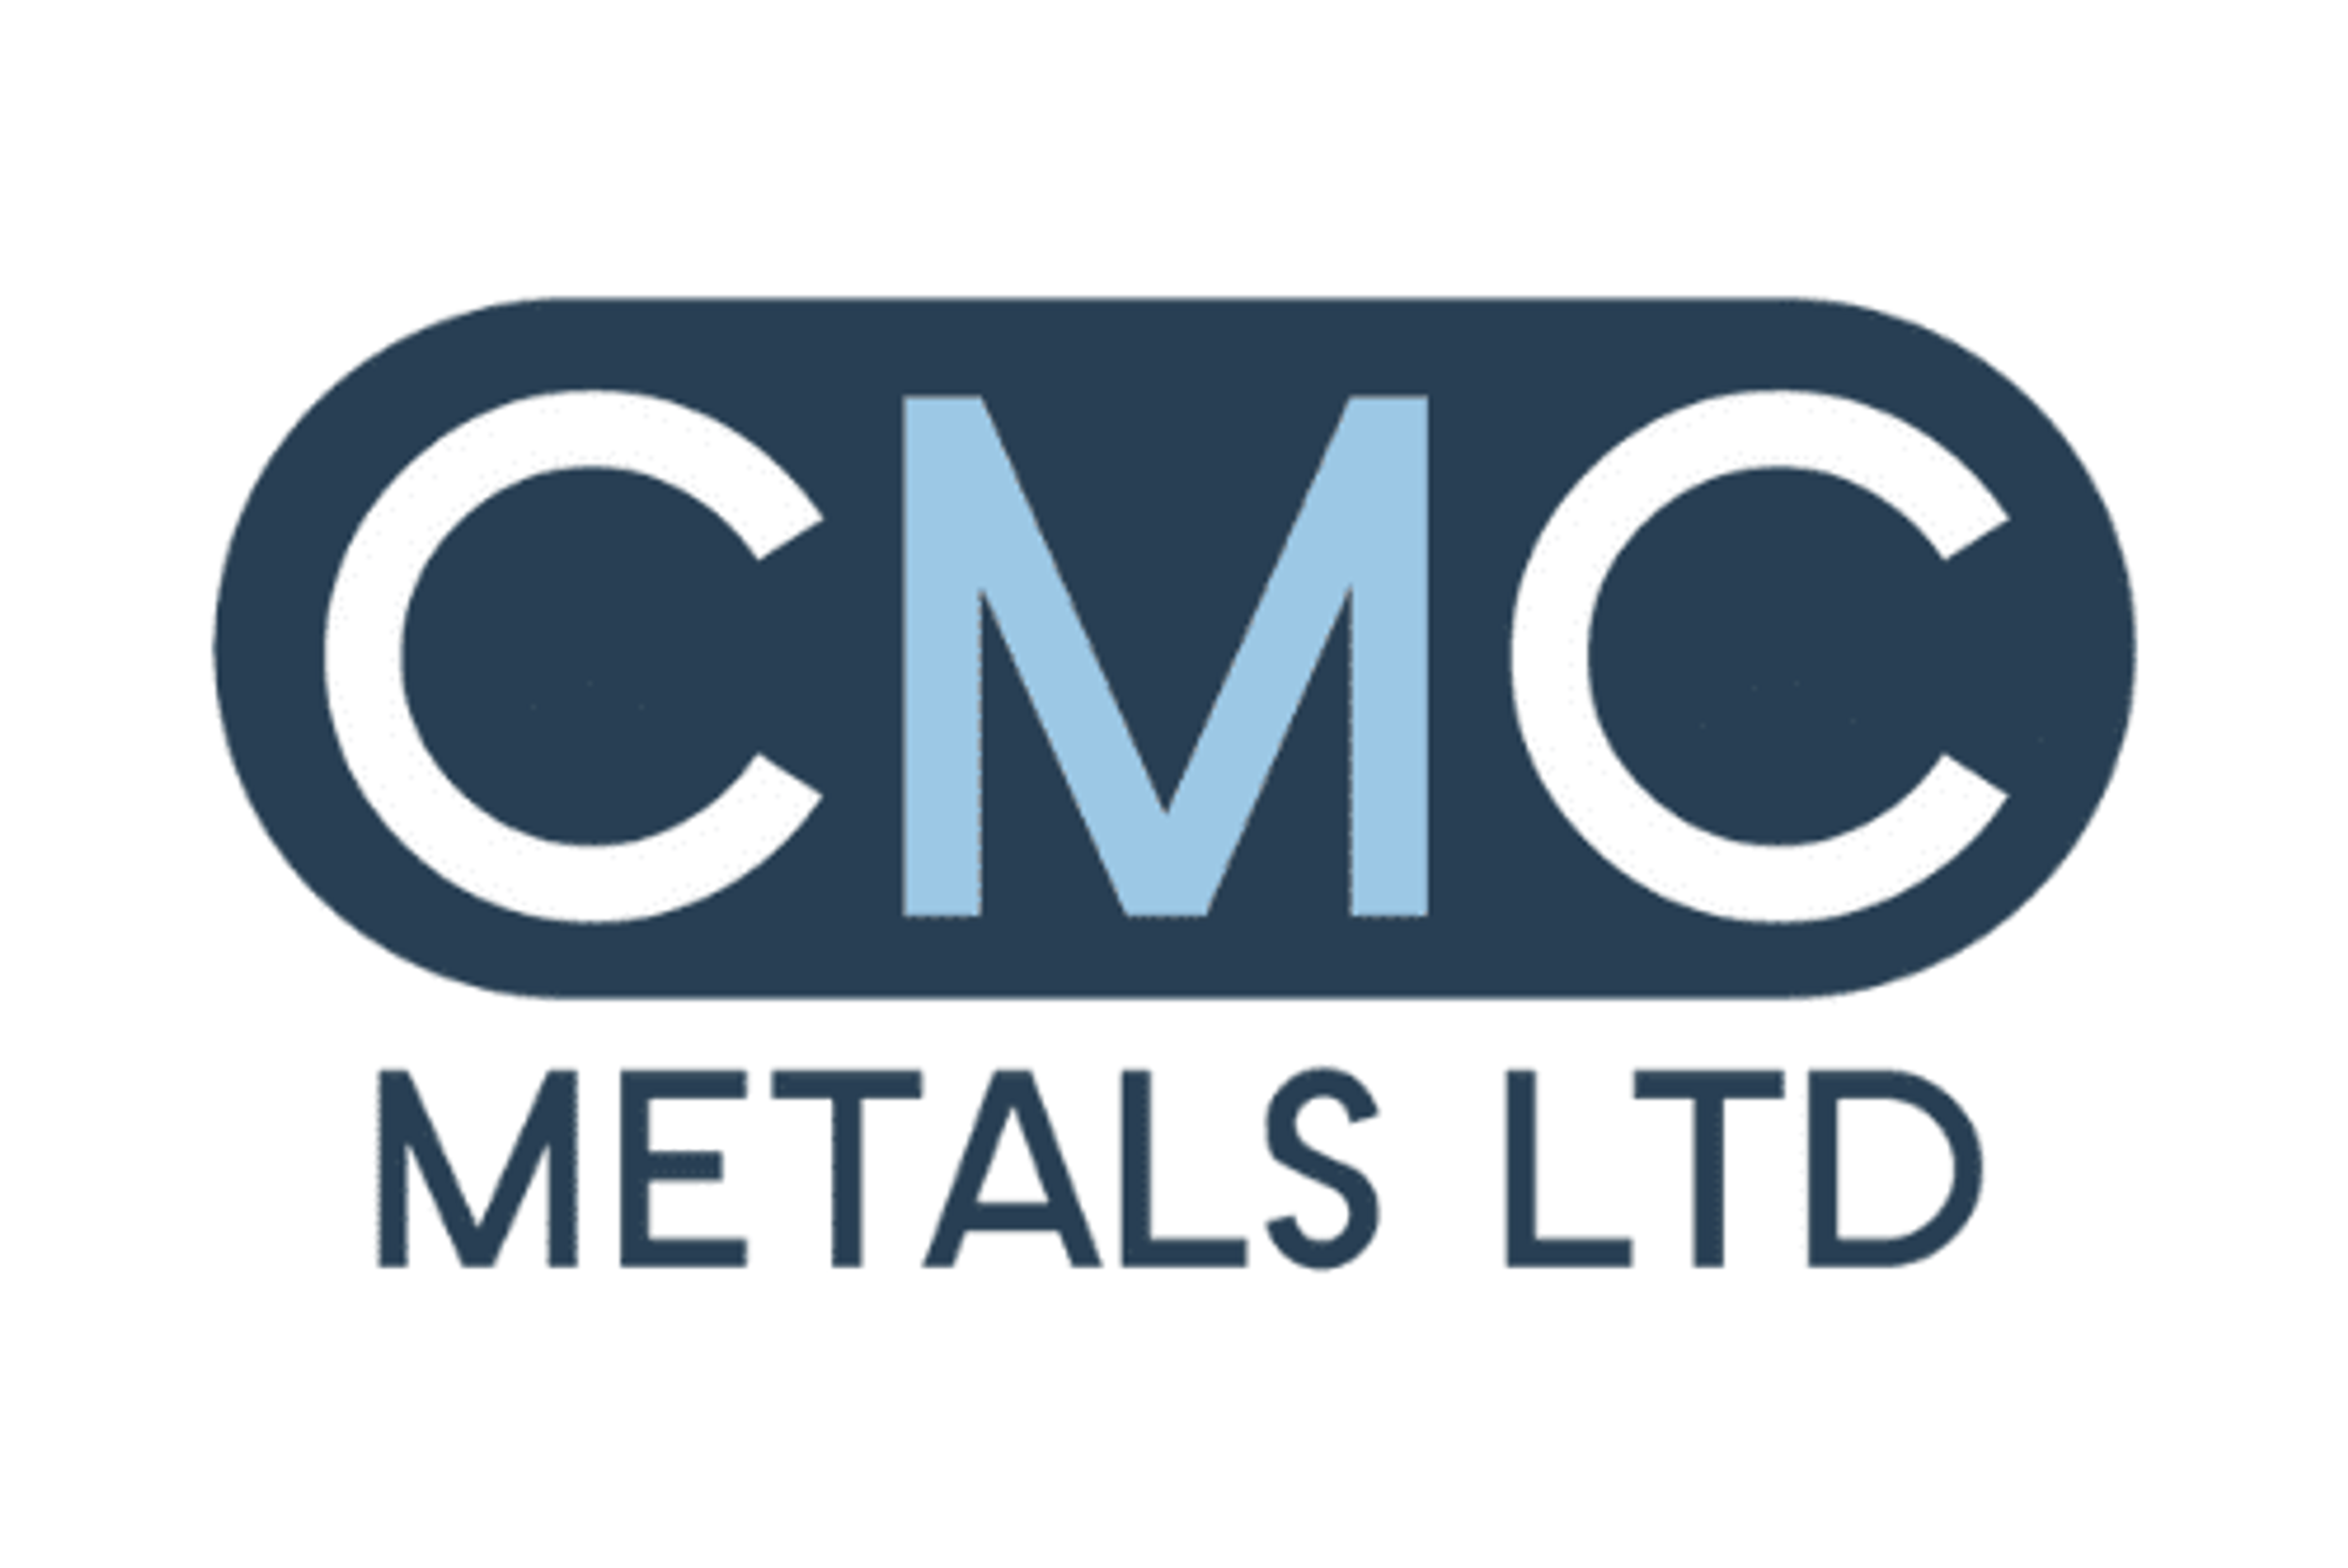 CMC Metals Ltd. Appoints Douglas Coleman to Board of Directors